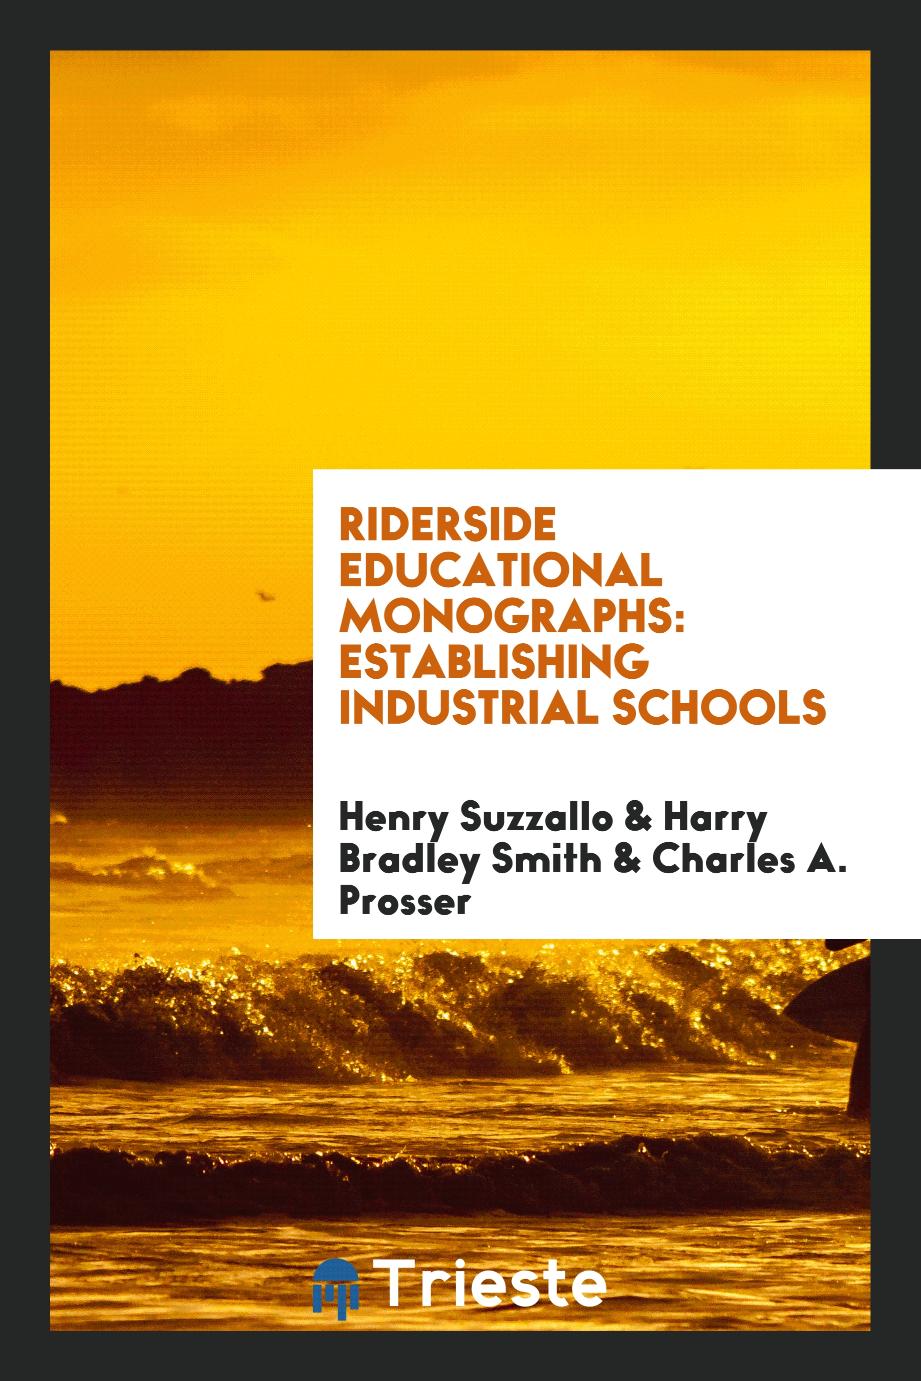 Riderside Educational Monographs: Establishing Industrial Schools